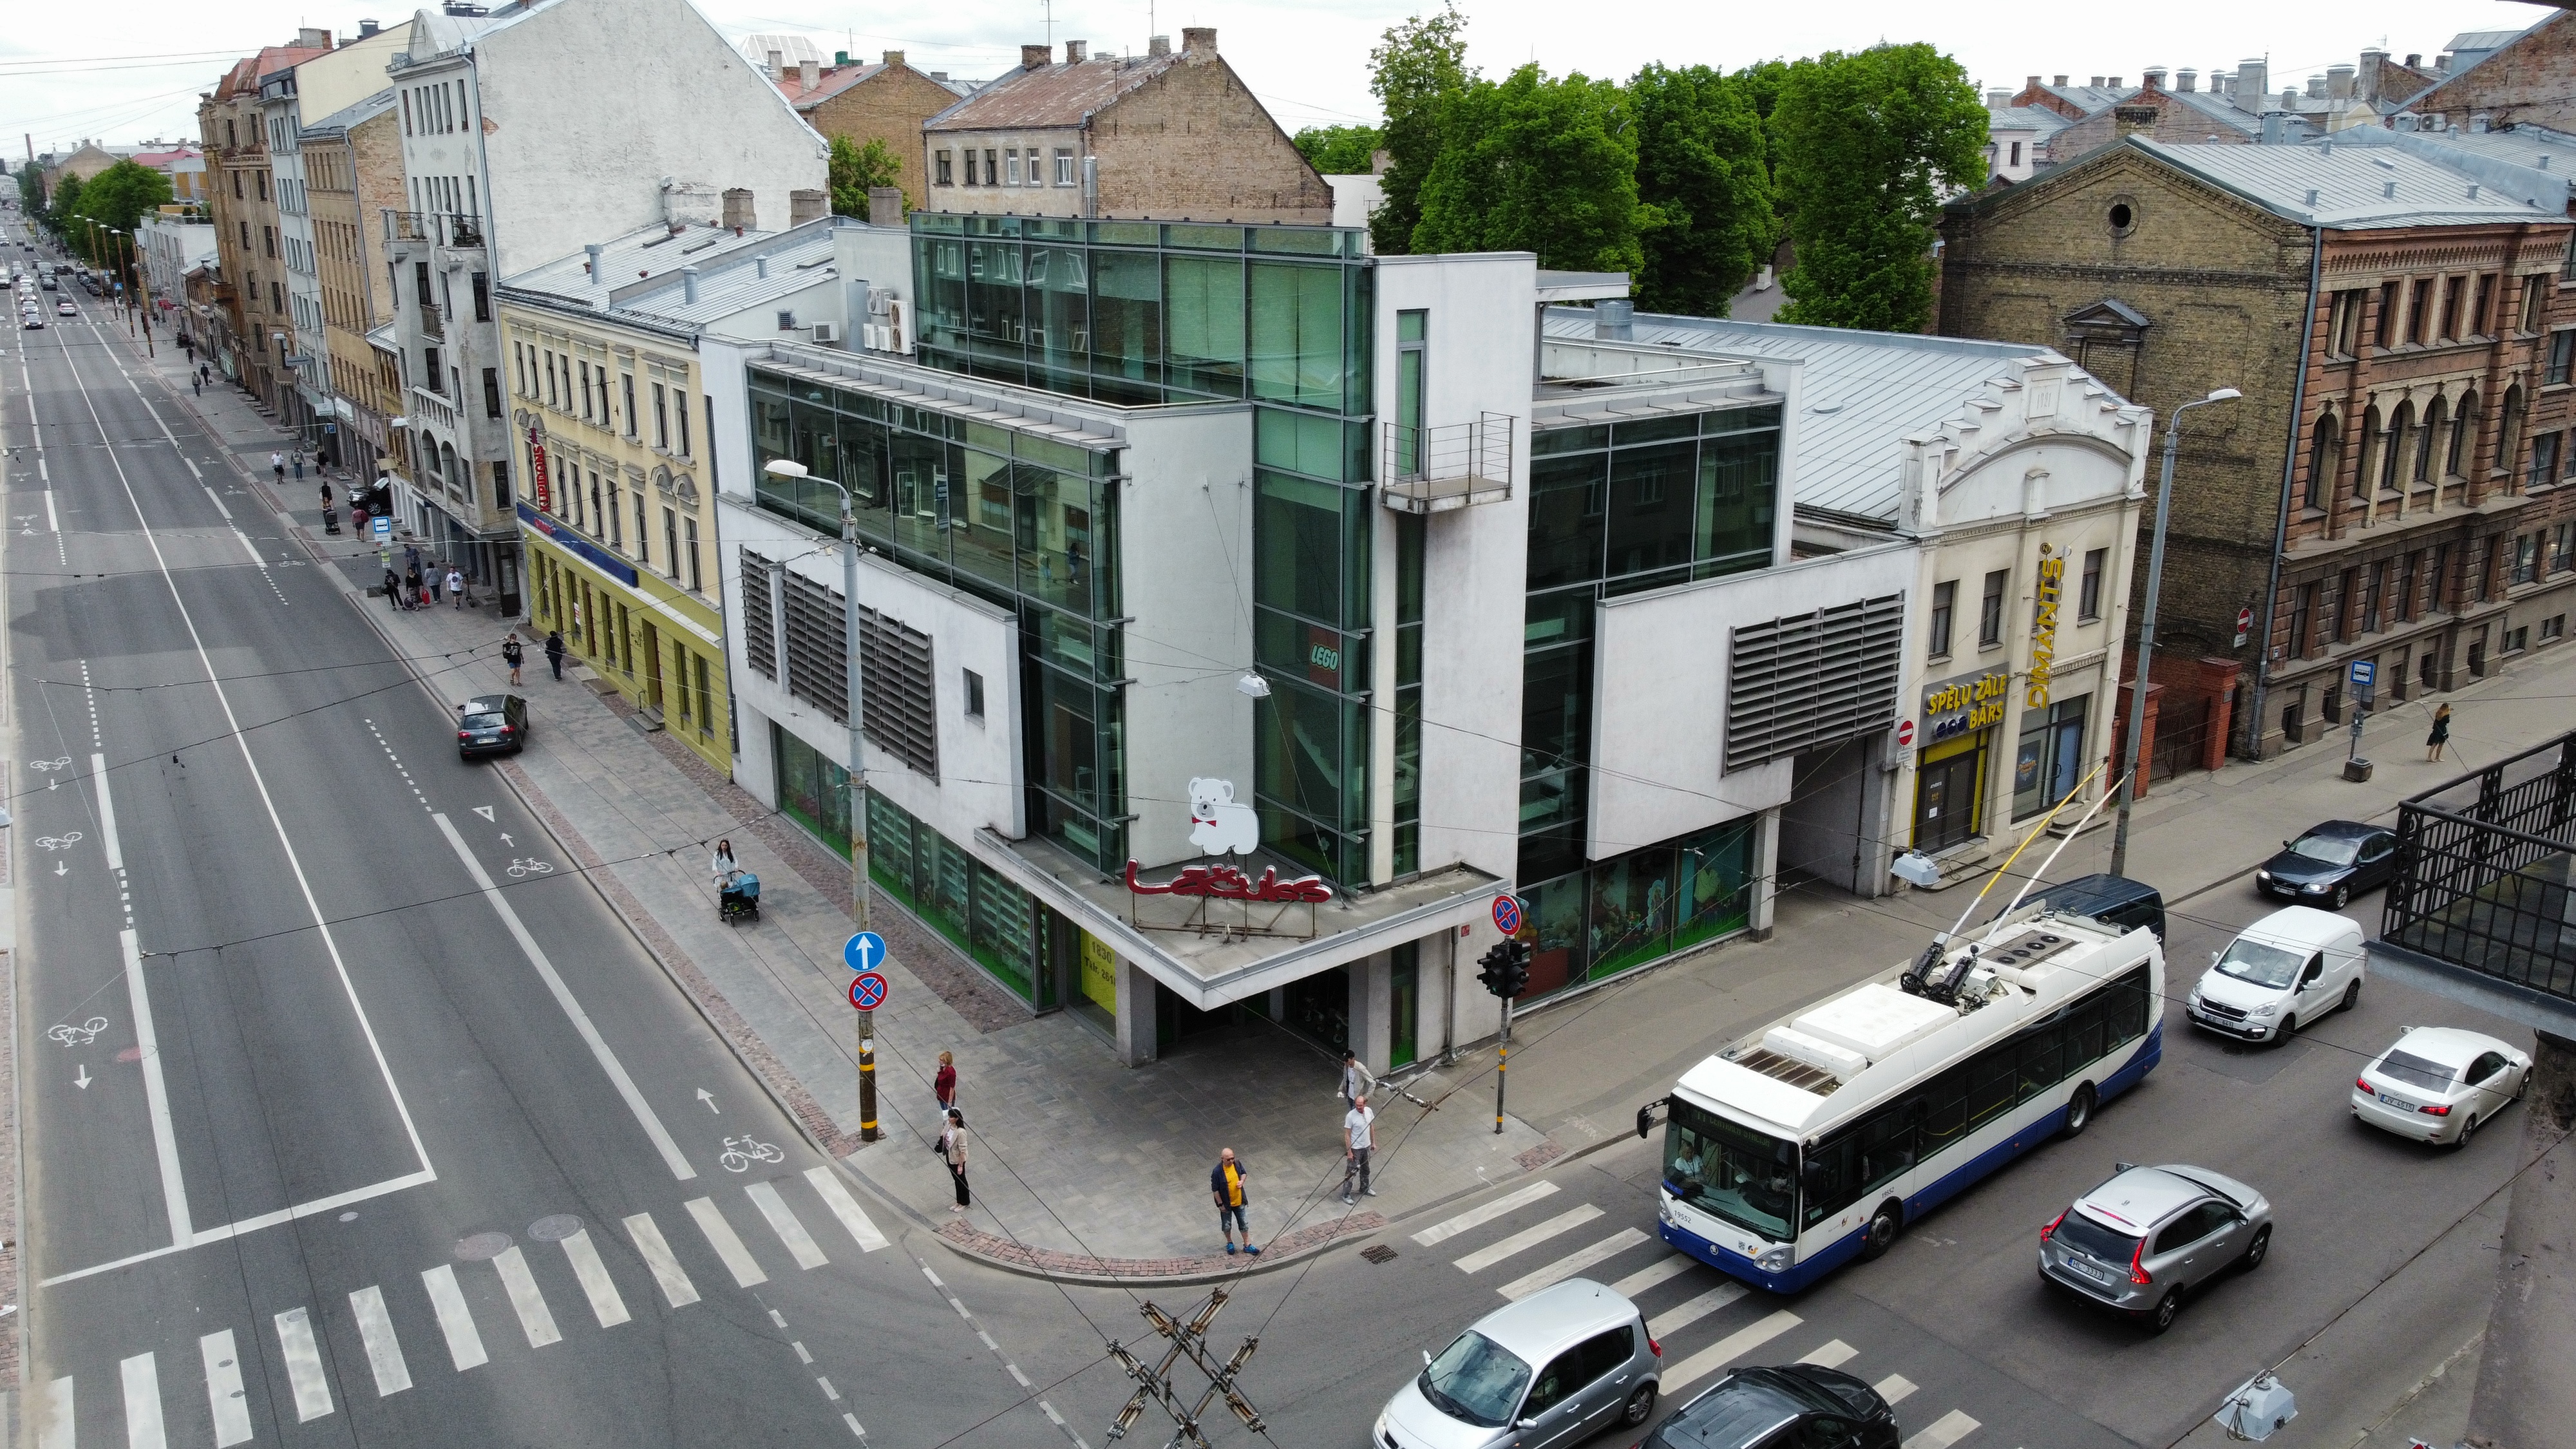 Инвестиционный объект, улица Čaka - Изображение 1